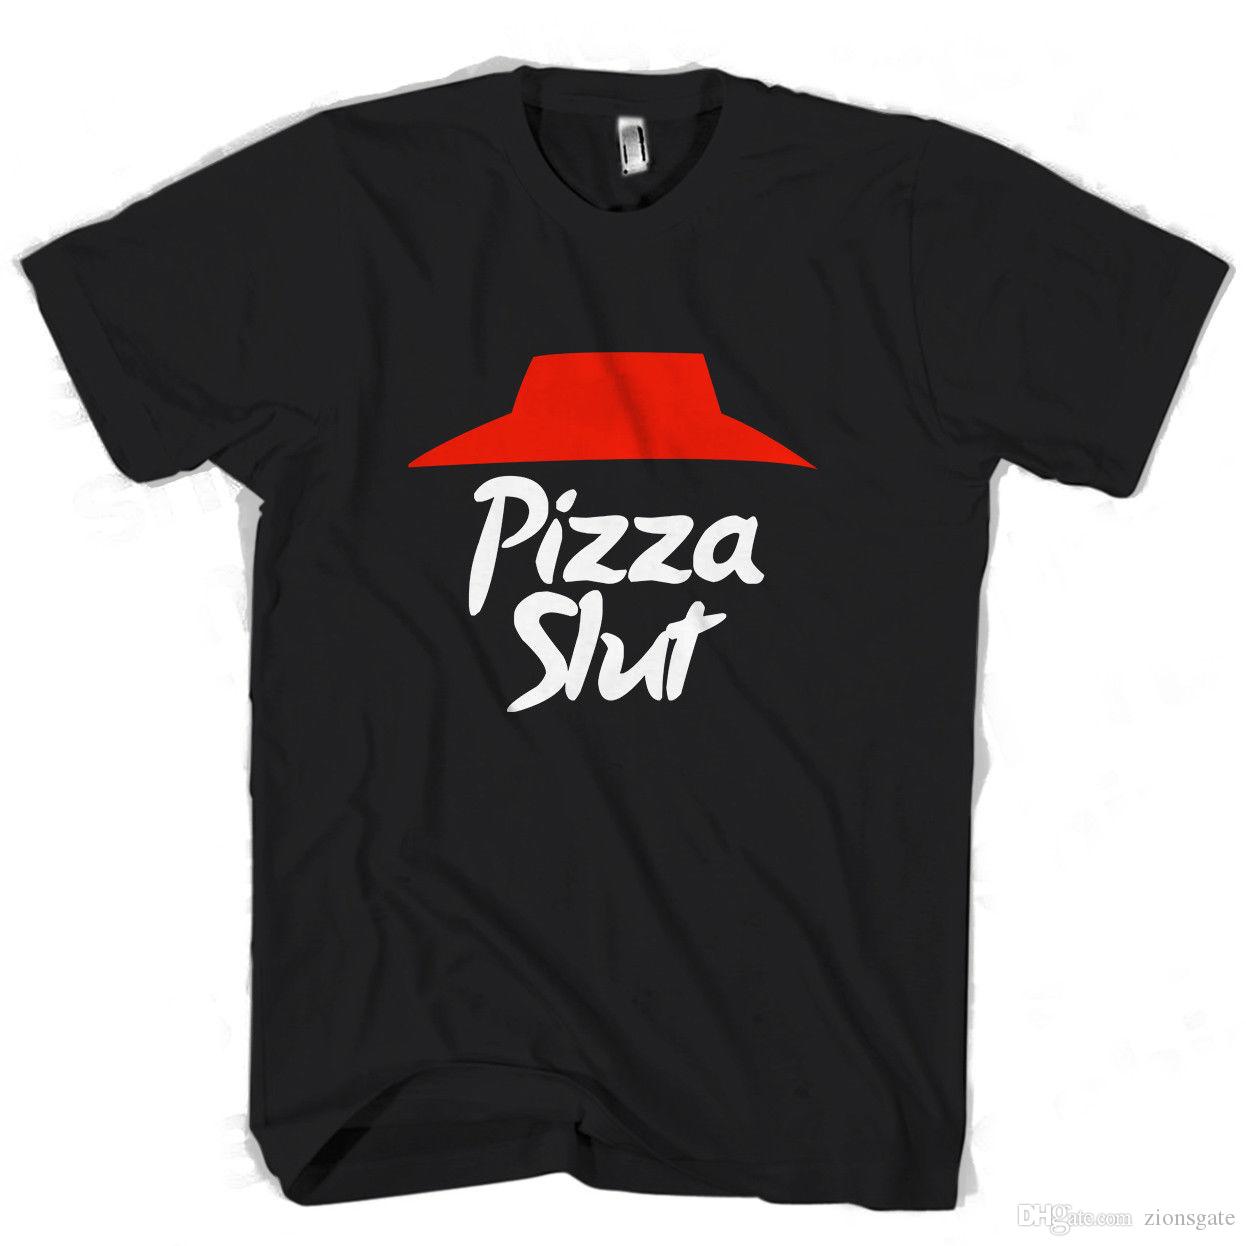 Awesome Woman Logo - Pizza Slut Logo Man / Woman T Shirt Awesome T Shirts For Sale White ...